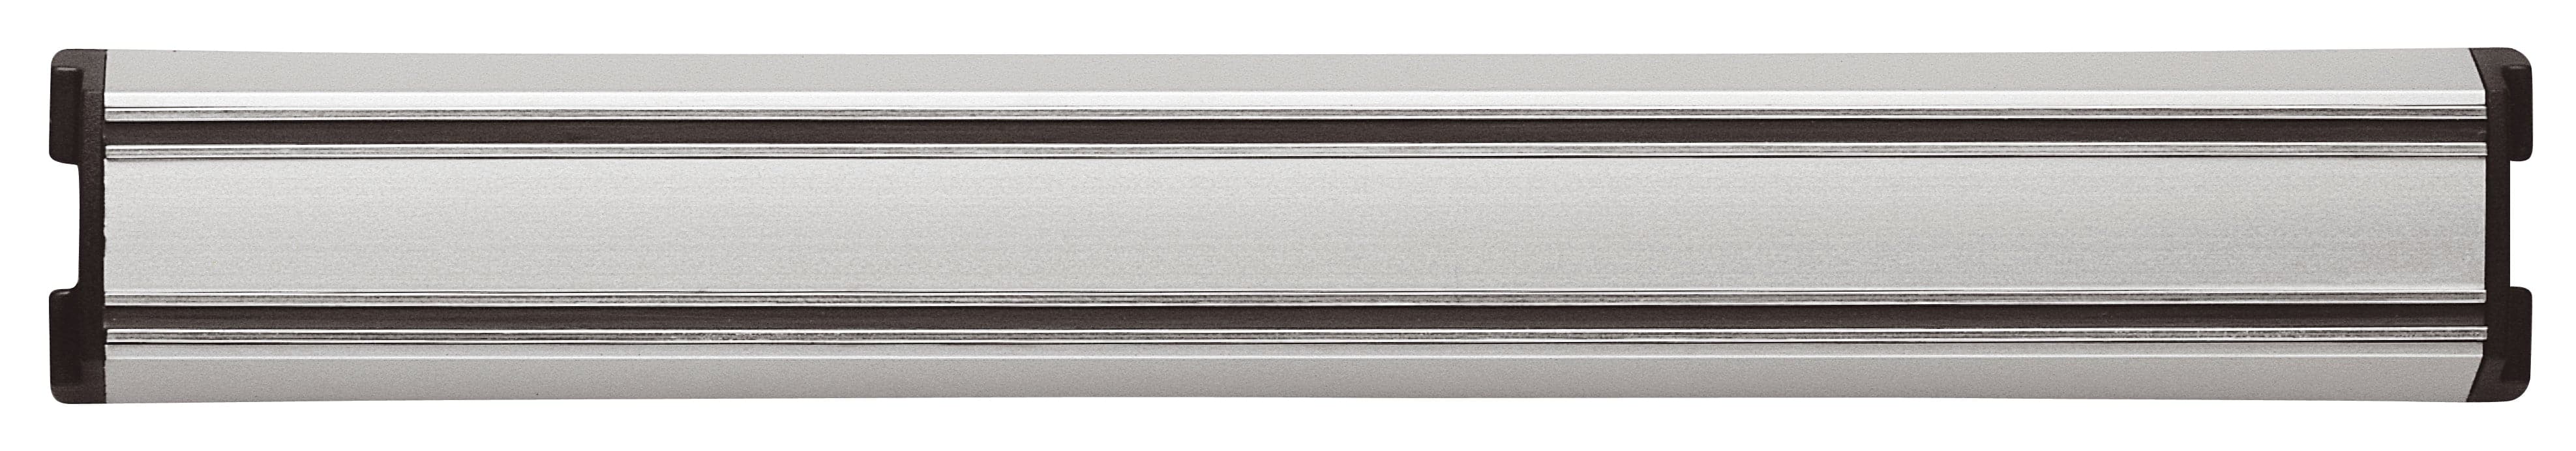 Zwilling - Knivmagnet Aluminium - 30 Cm.